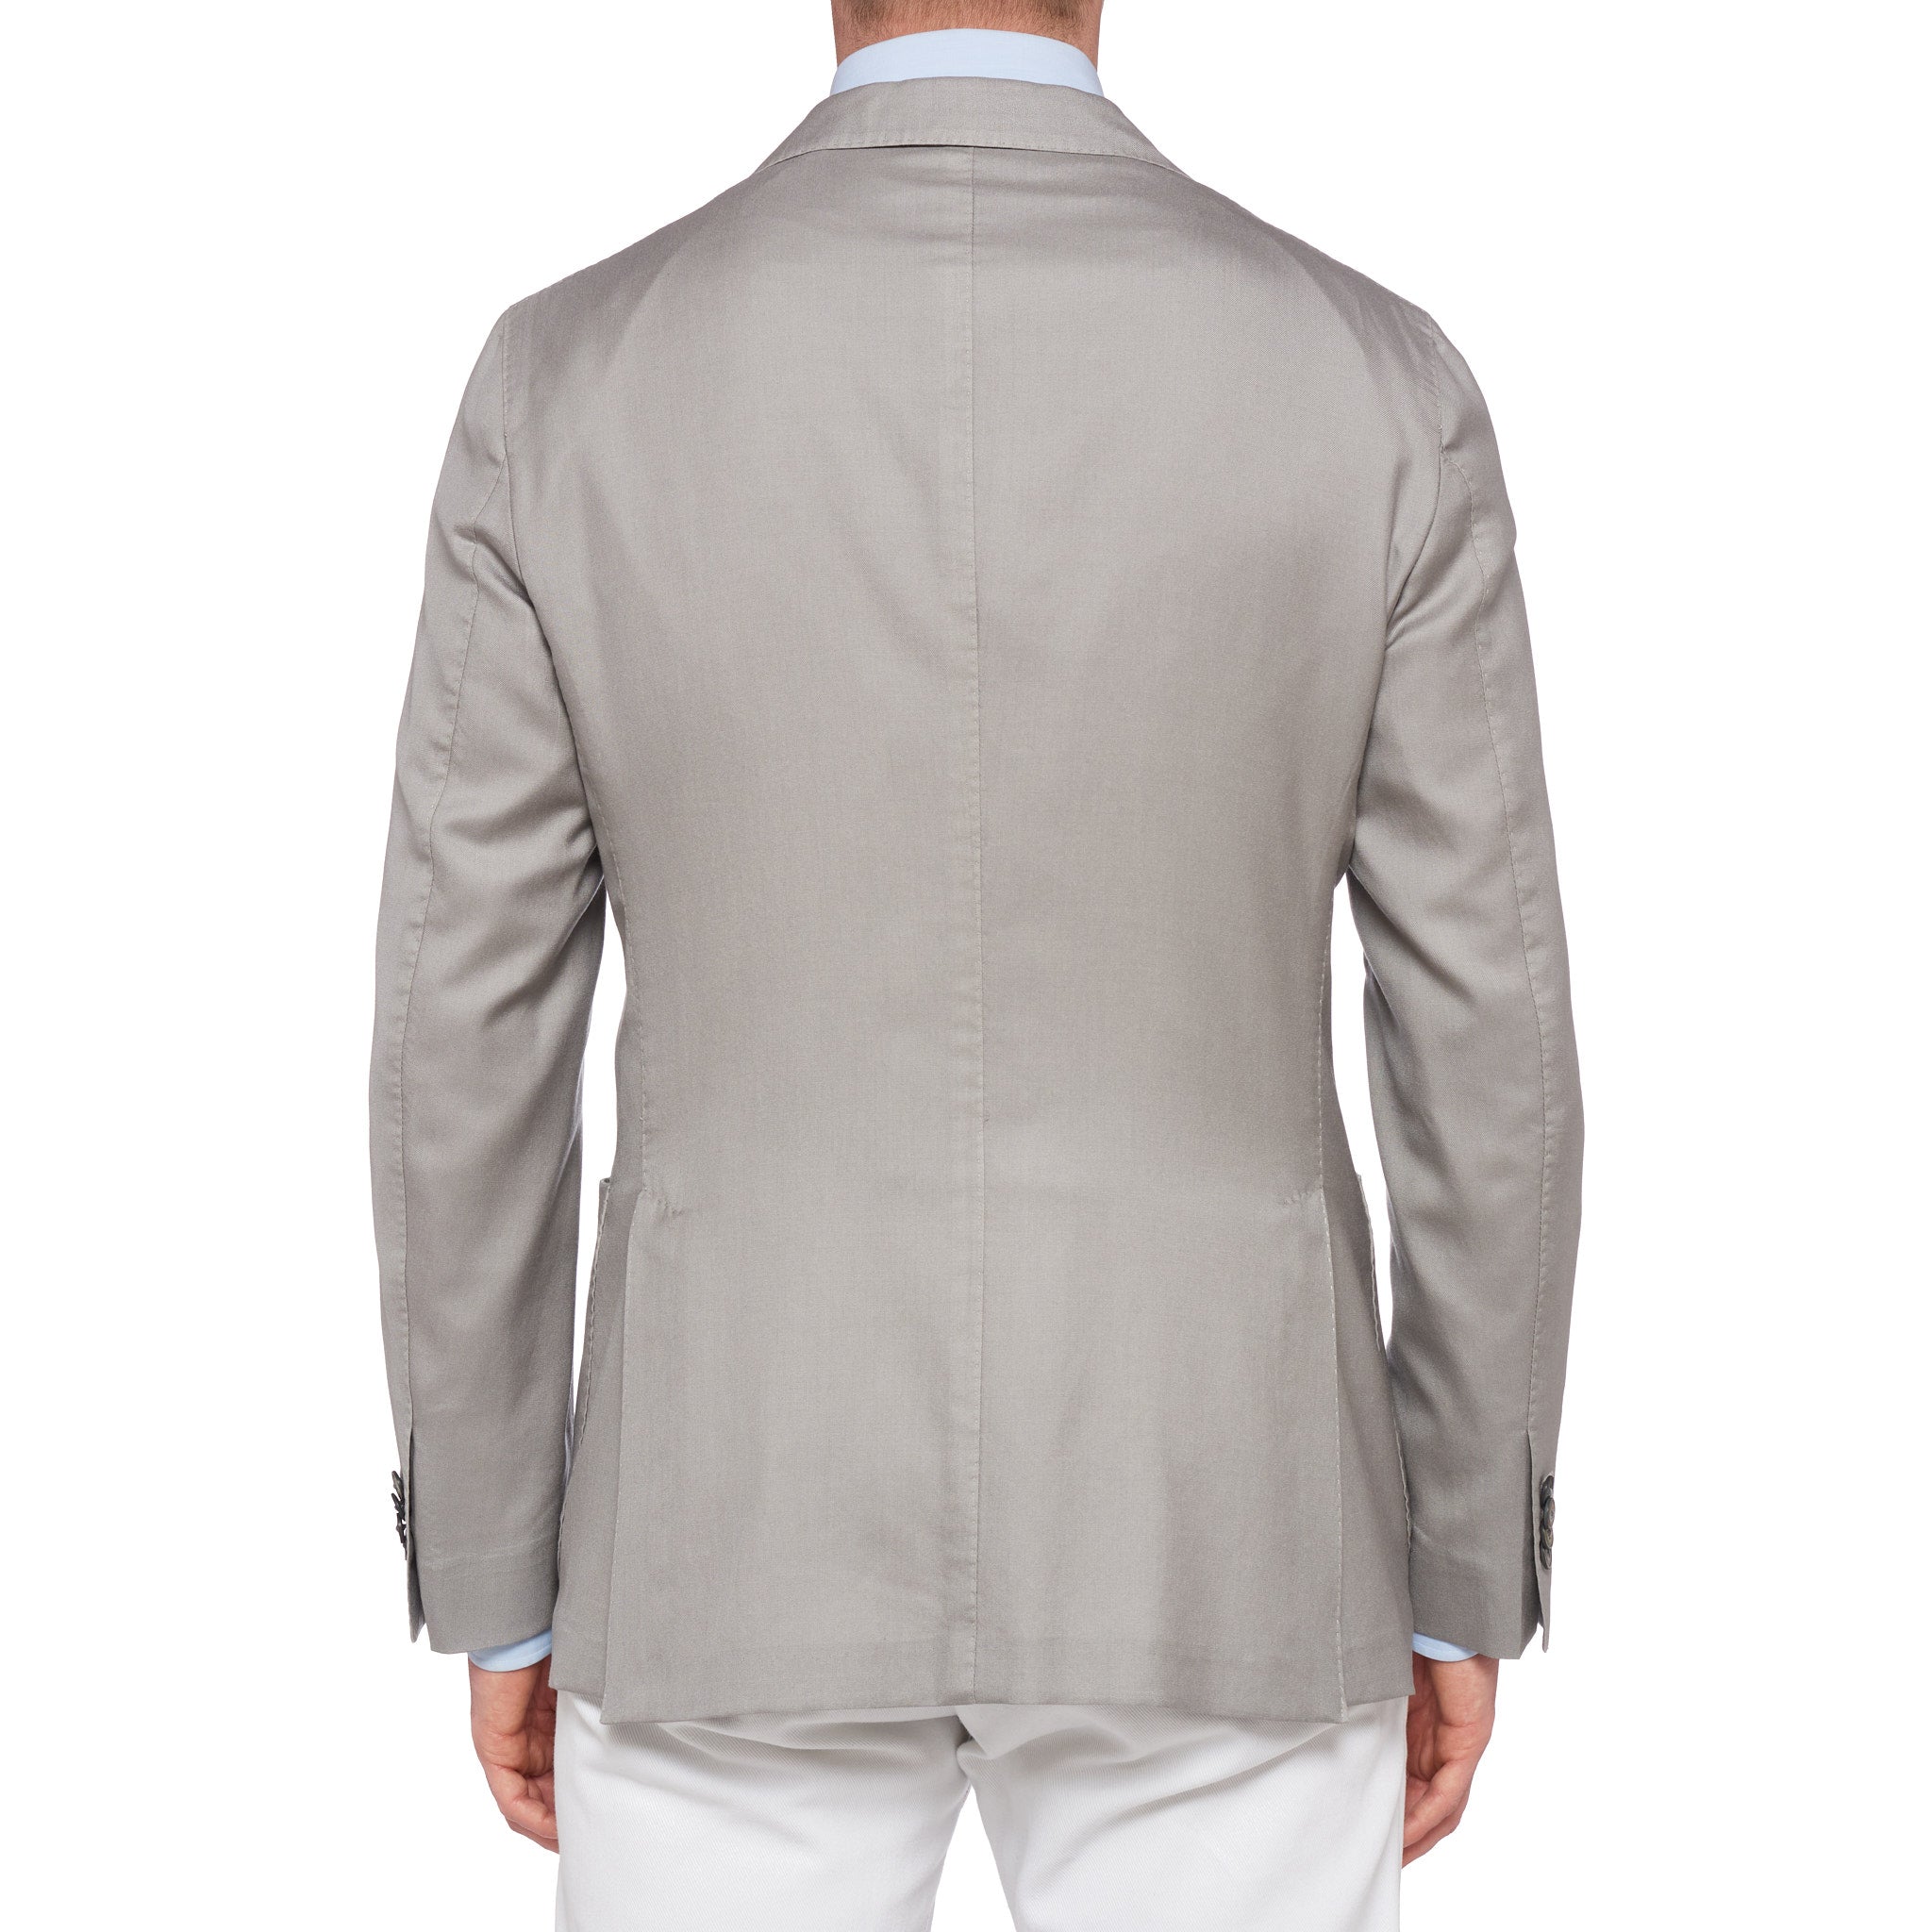 BOGLIOLI Milano "K.Jacket" Light Gray Cashmere-Silk Unlined Blazer Jacket NEW BOGLIOLI